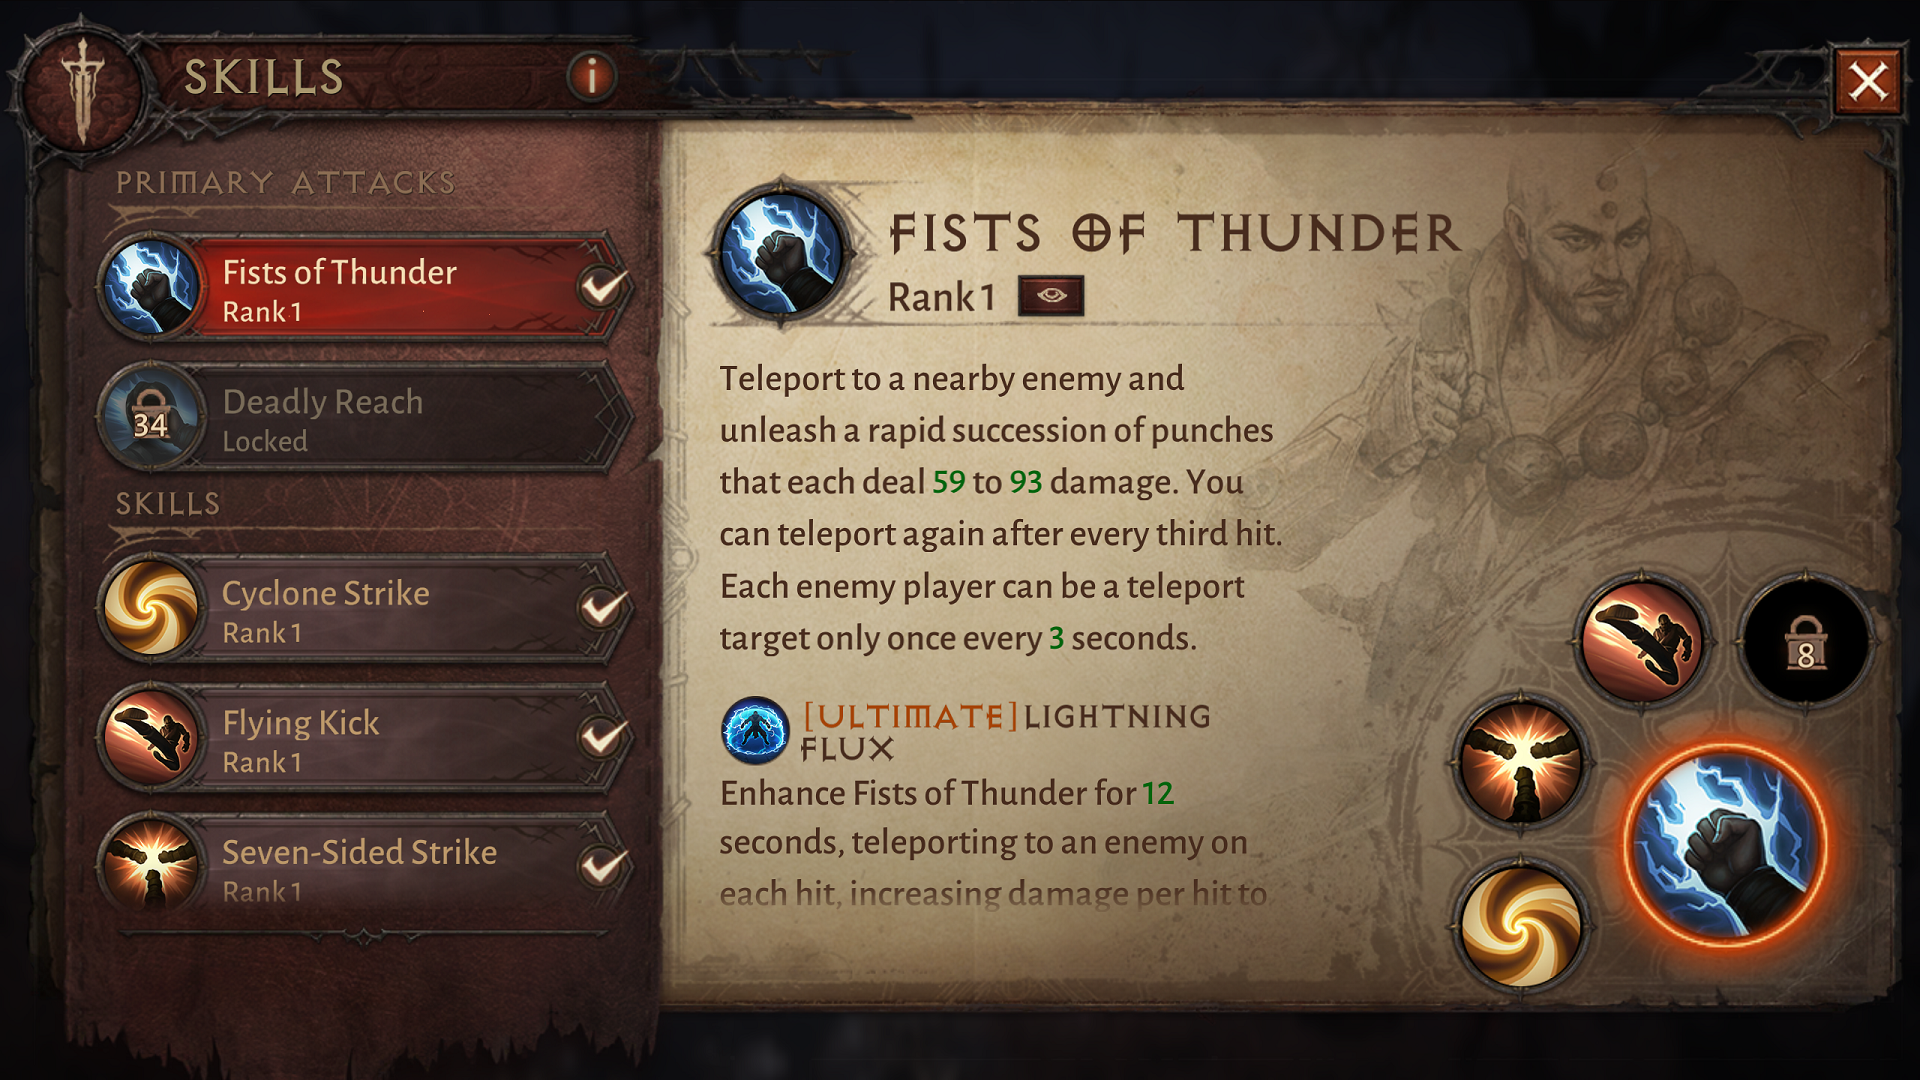 The Fists of Thunder ability description in Diablo Immortal